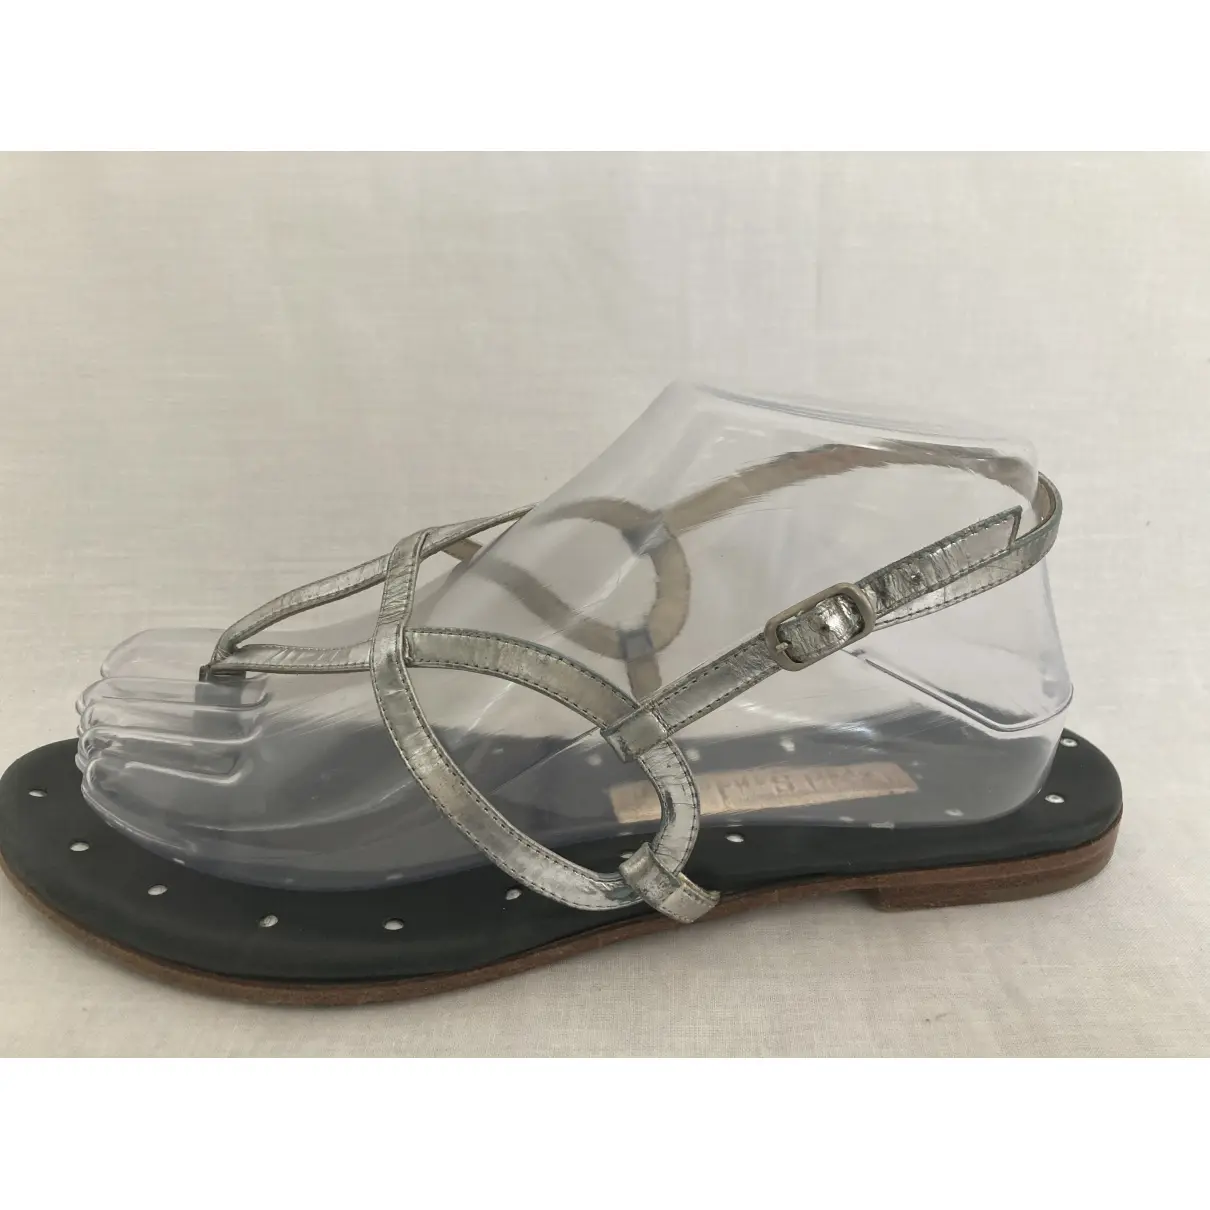 Patent leather sandal Rupert Sanderson